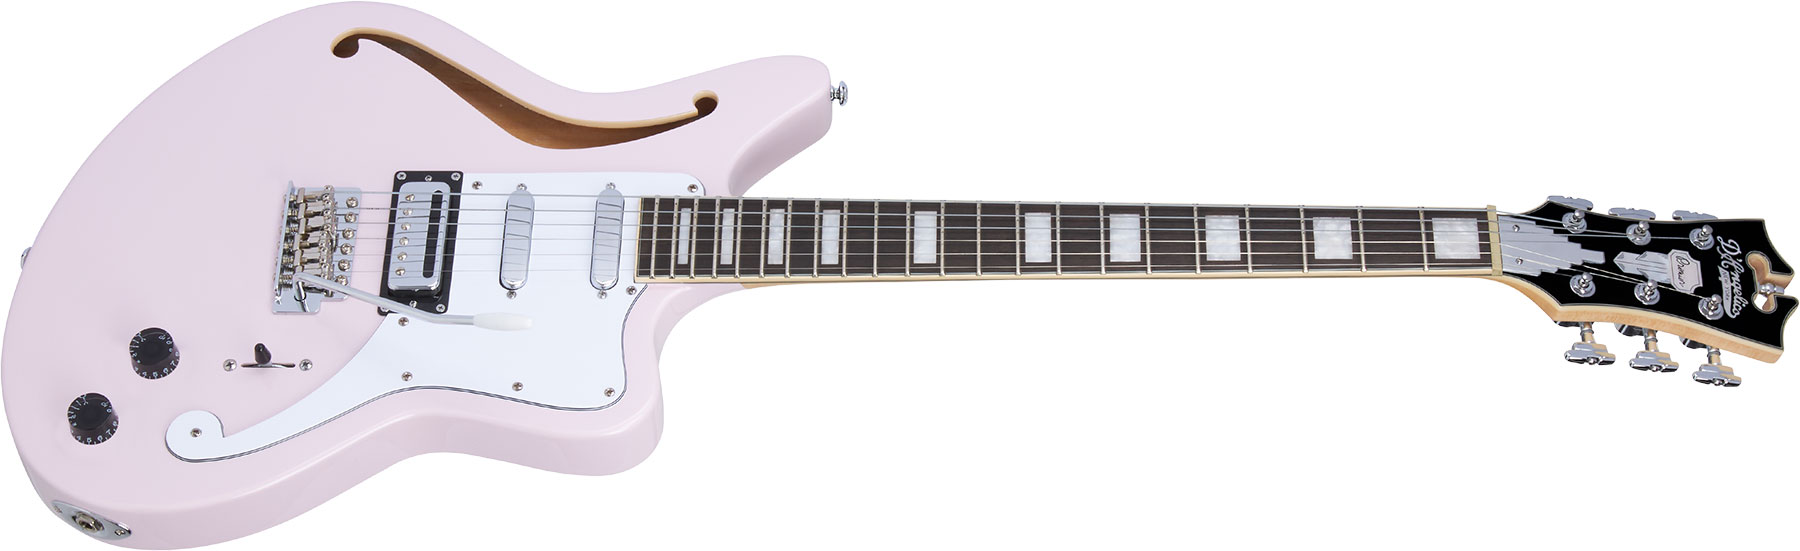 D'angelico Bedford Sh Premier Hss Trem Ova - Shell Pink - Semi-Hollow E-Gitarre - Variation 1